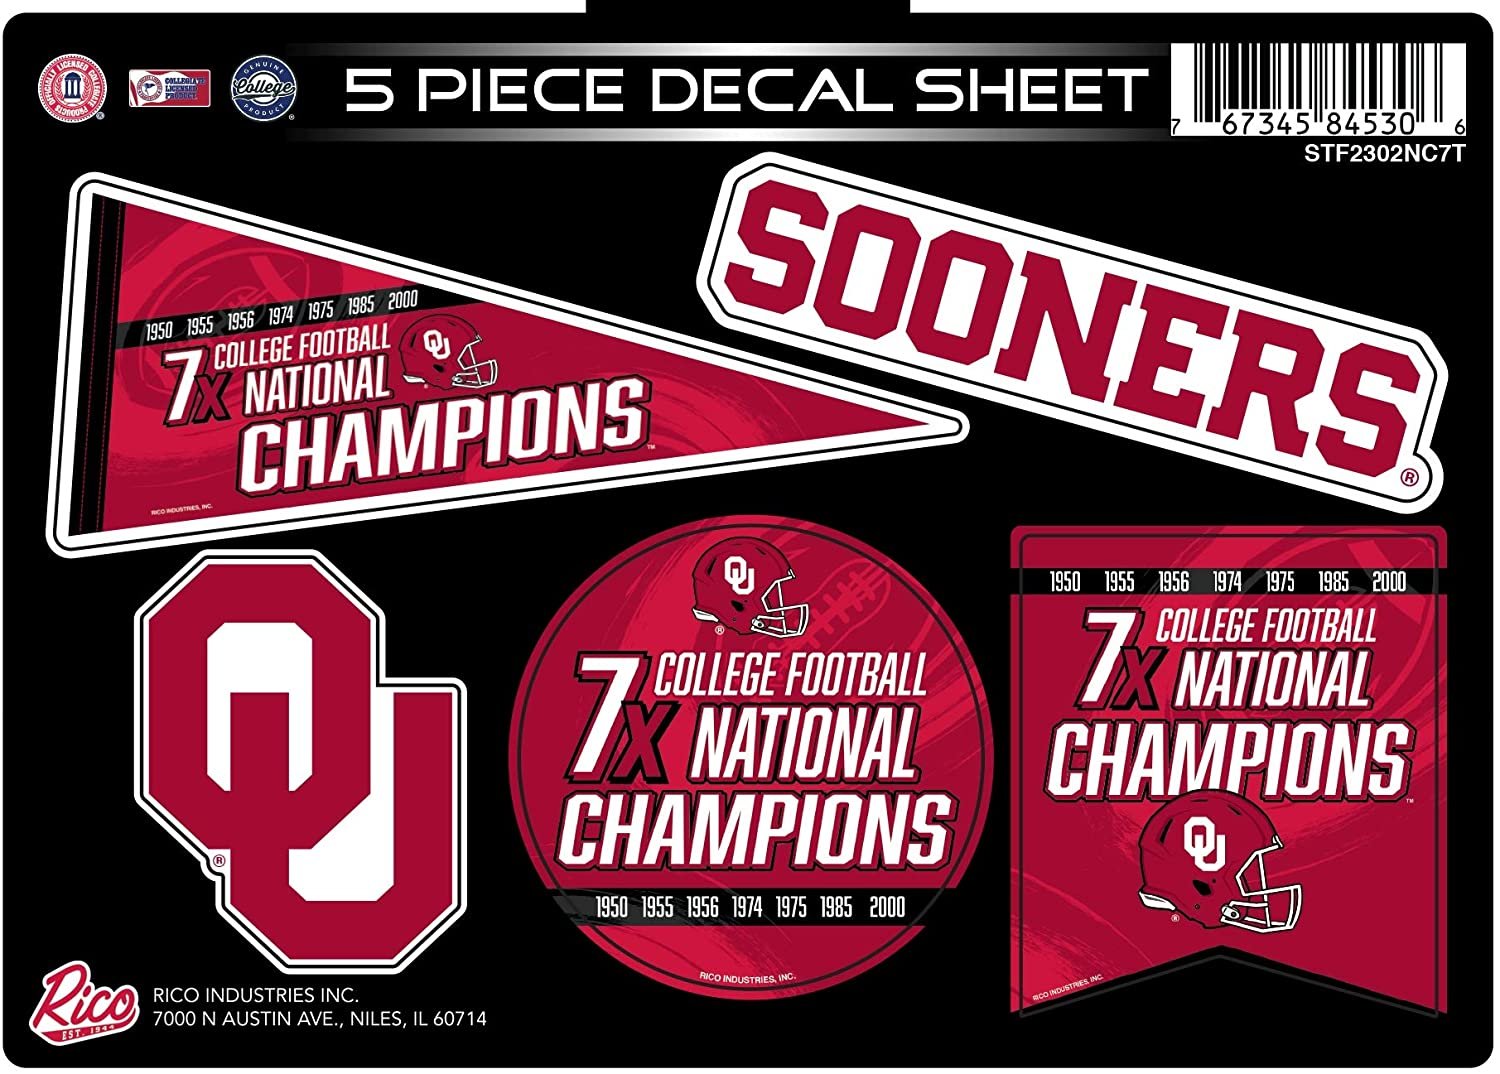 Oklahoma Sooners Decal Sticker Sheet 7X Time Champions 5 Piece Multi Flat Vinyl Emblem College Football University of